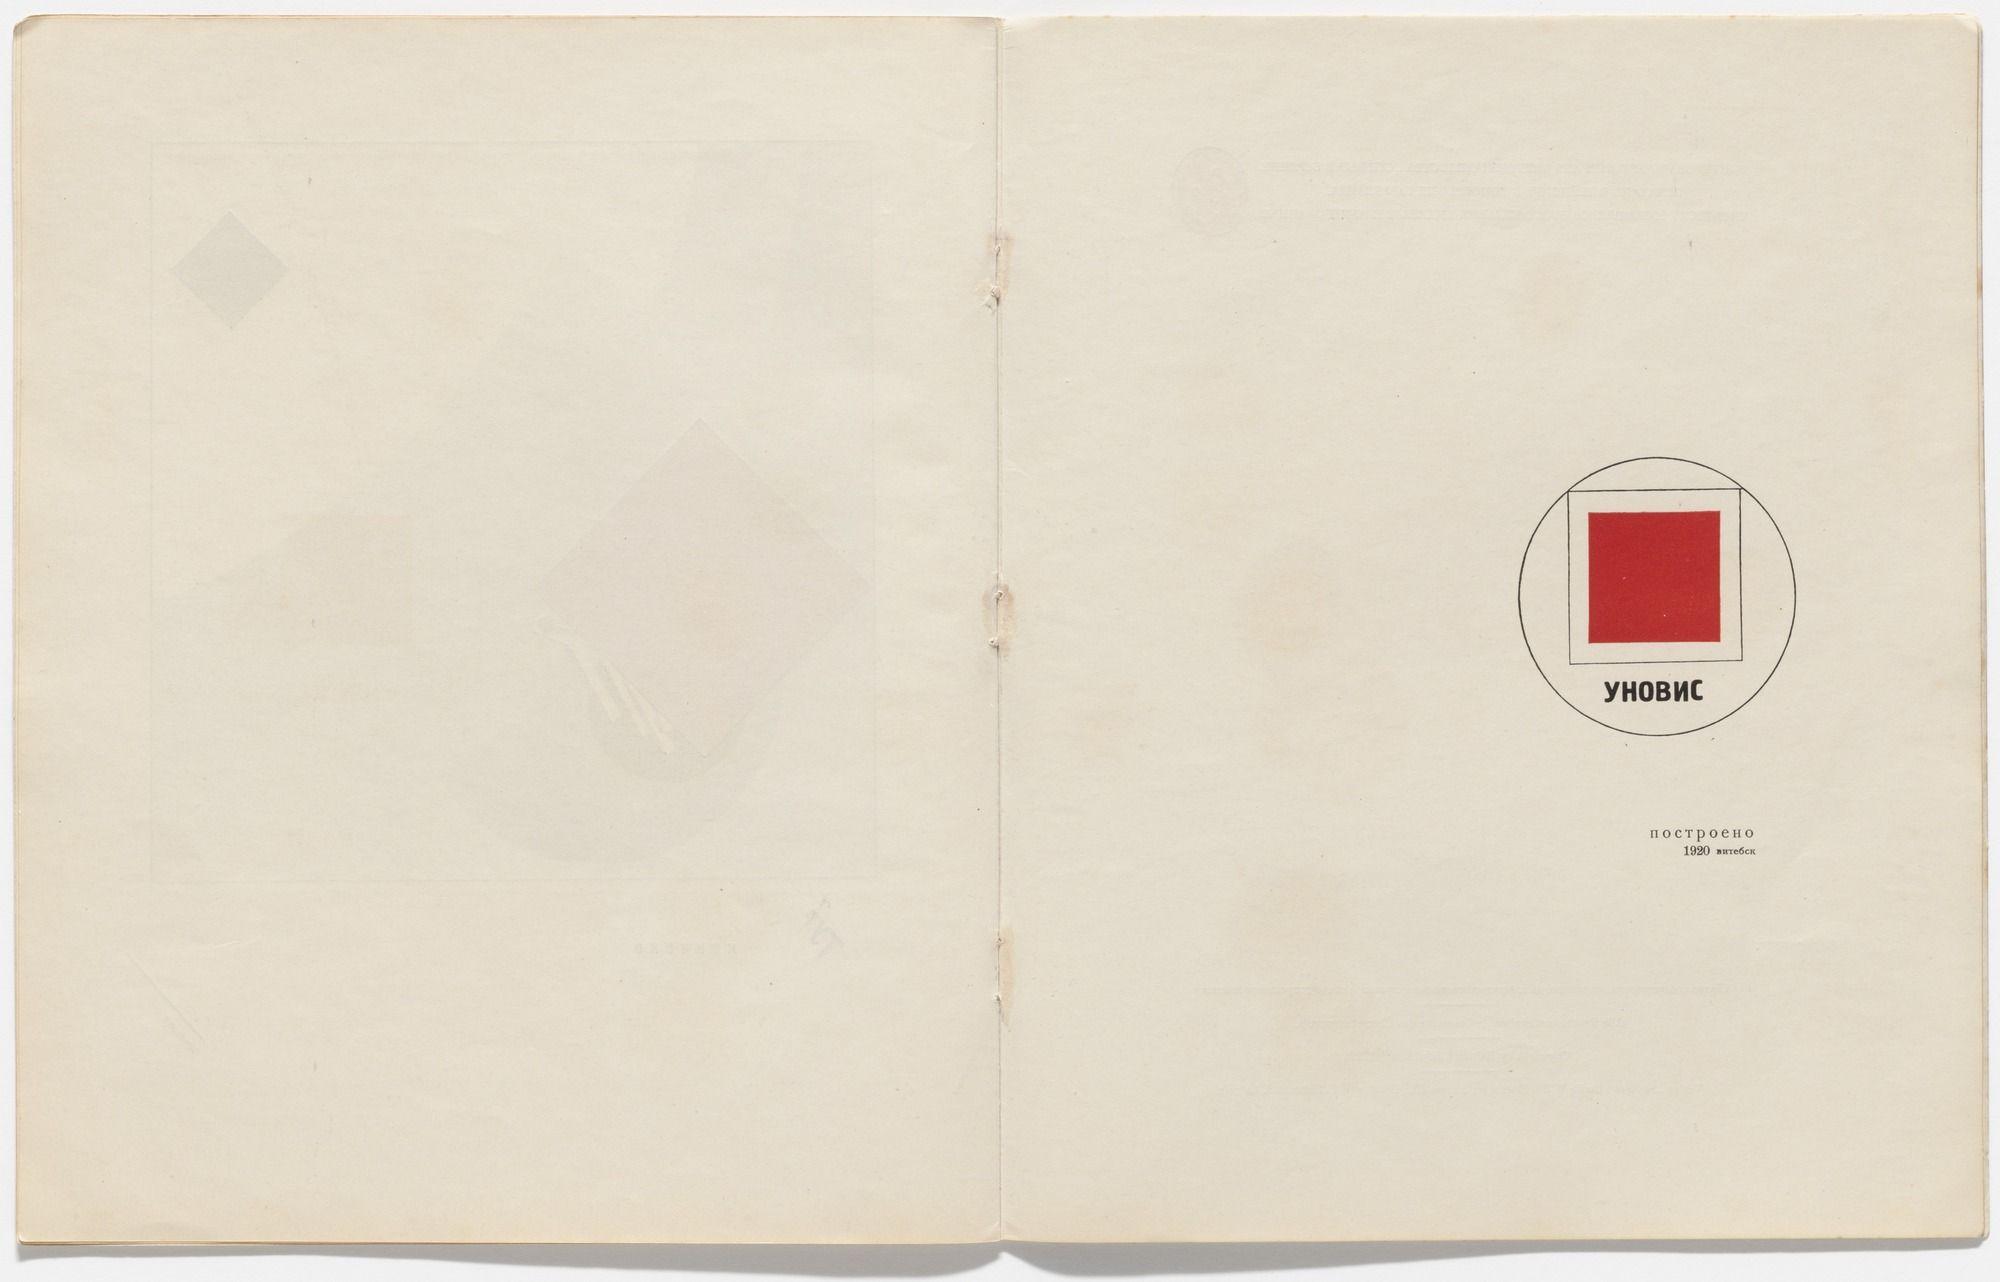 Two Red Squares Logo - El Lissitzky. Pro Dva Kvadrata. Suprematicheskii Skaz V 6 Ti